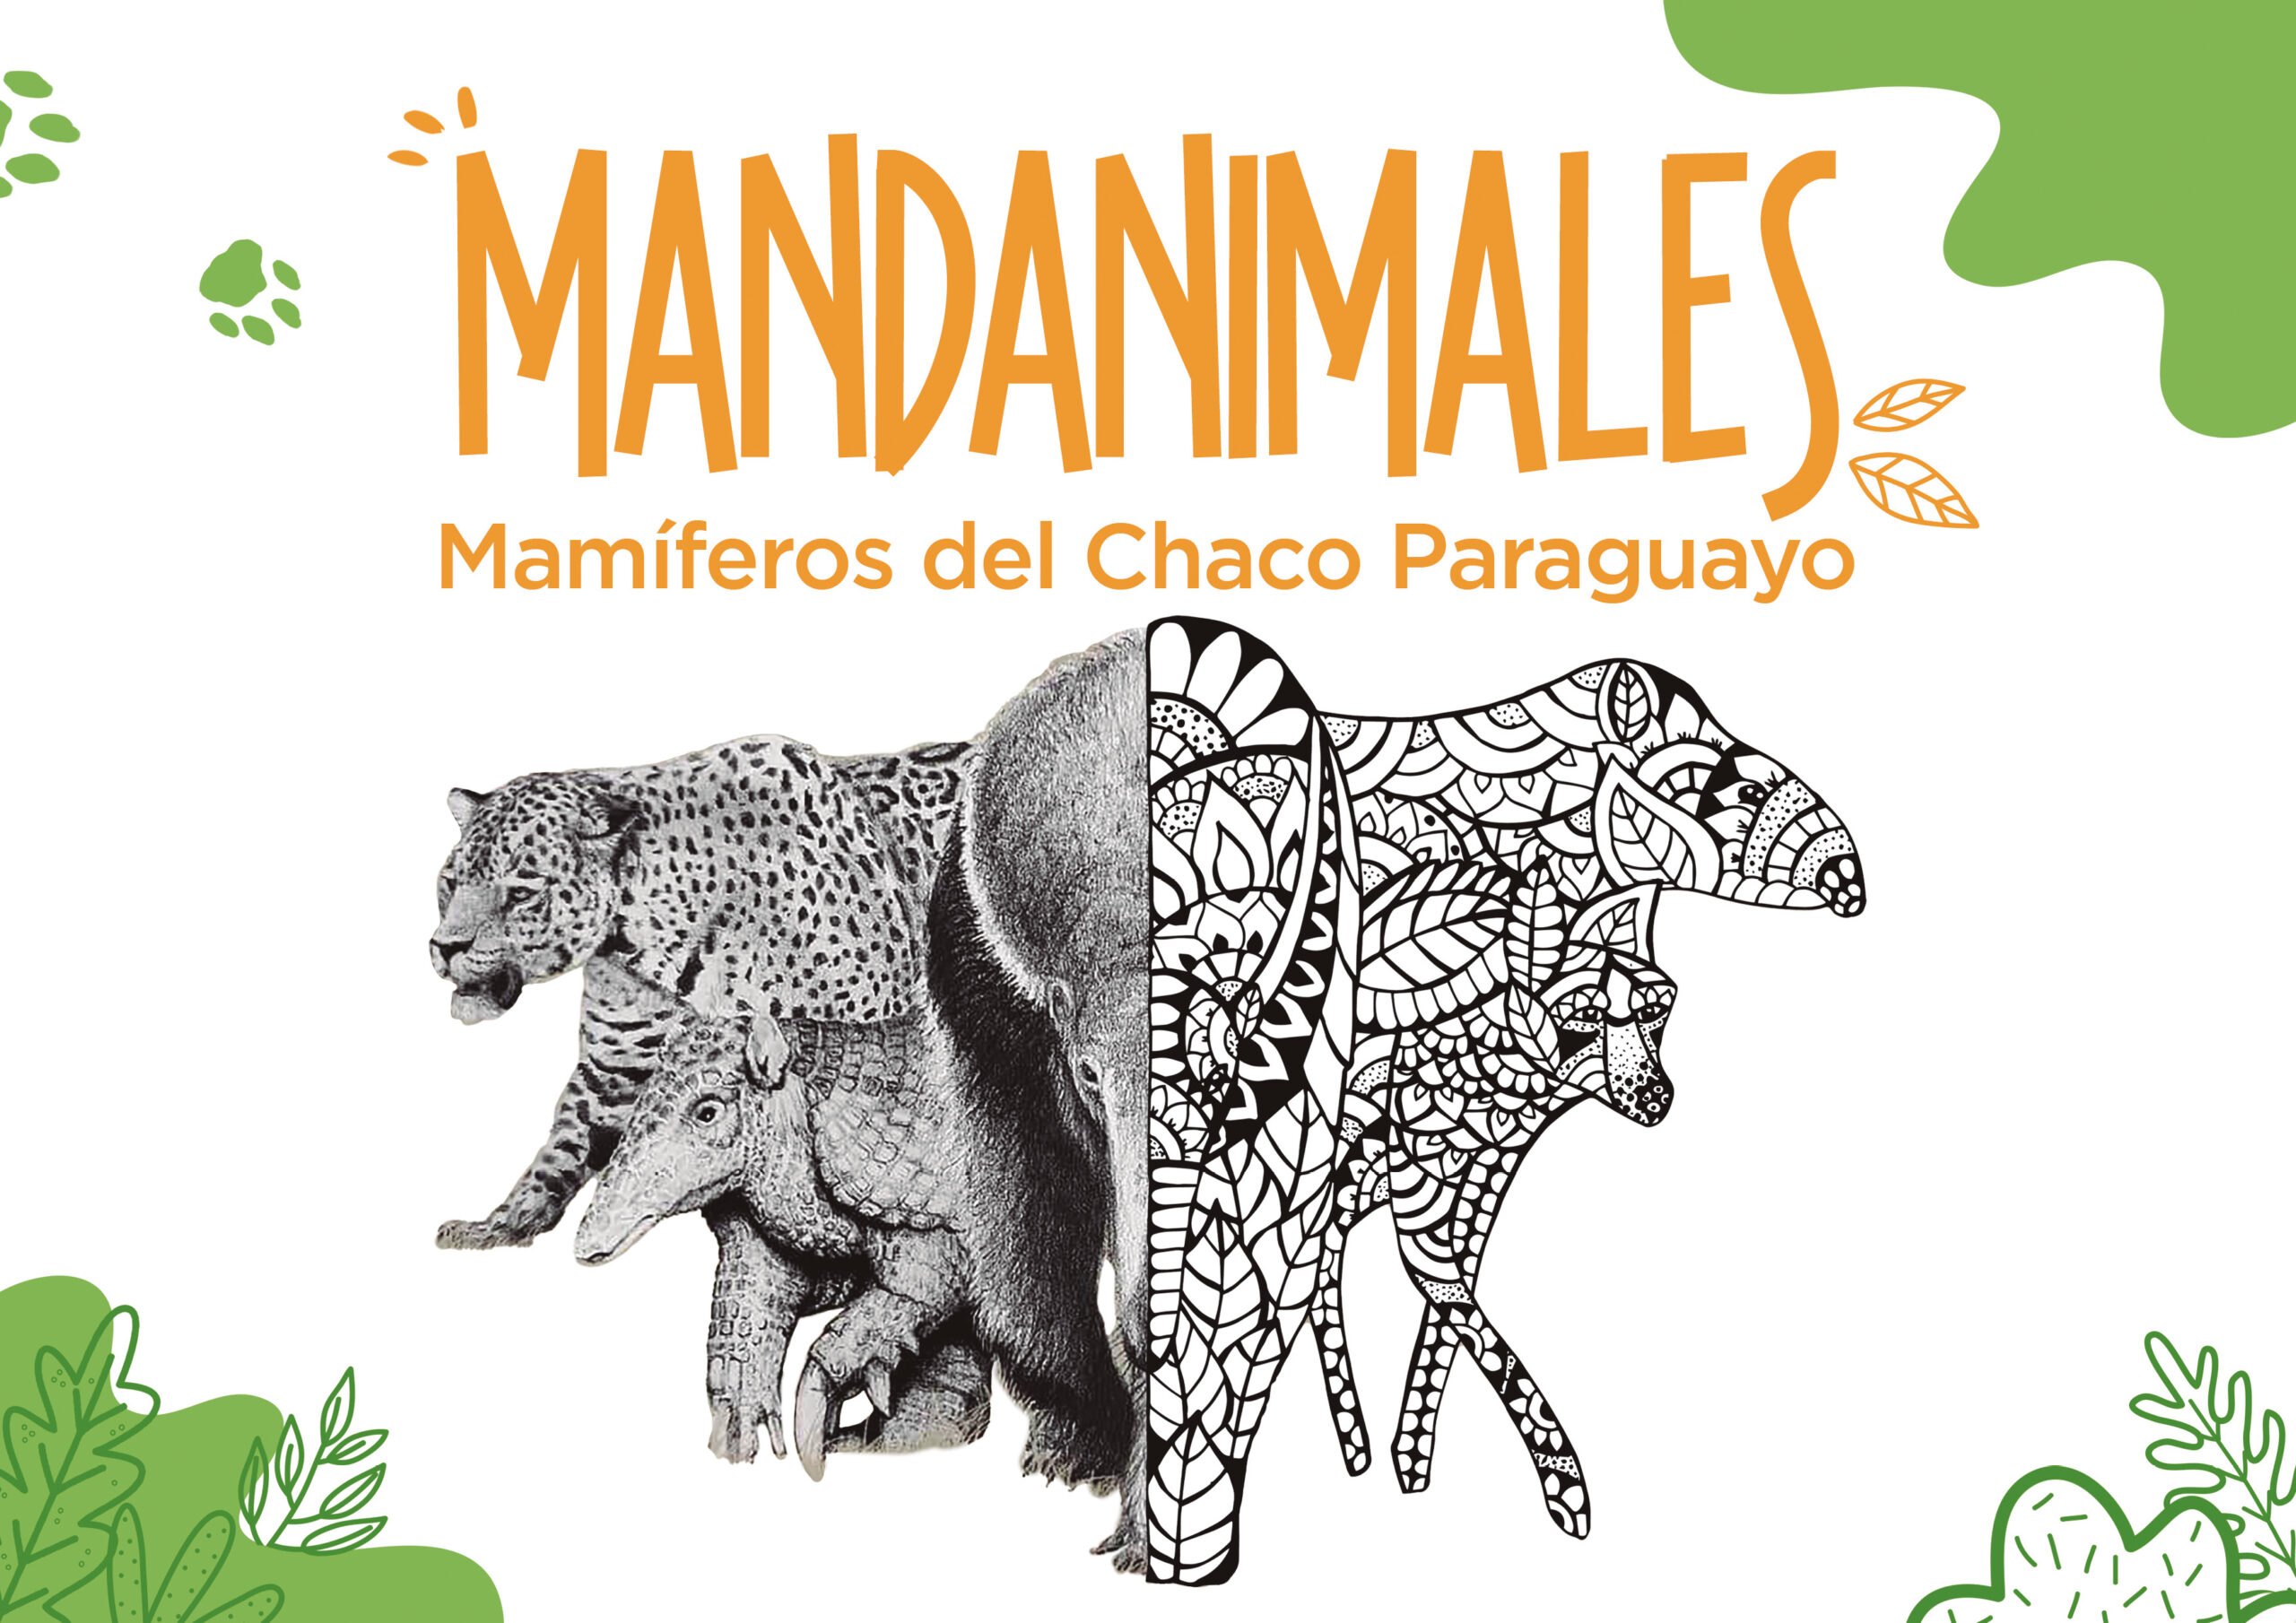 MANDANIMALES – MAMÍFEROS DEL CHACO PARAGUAYO